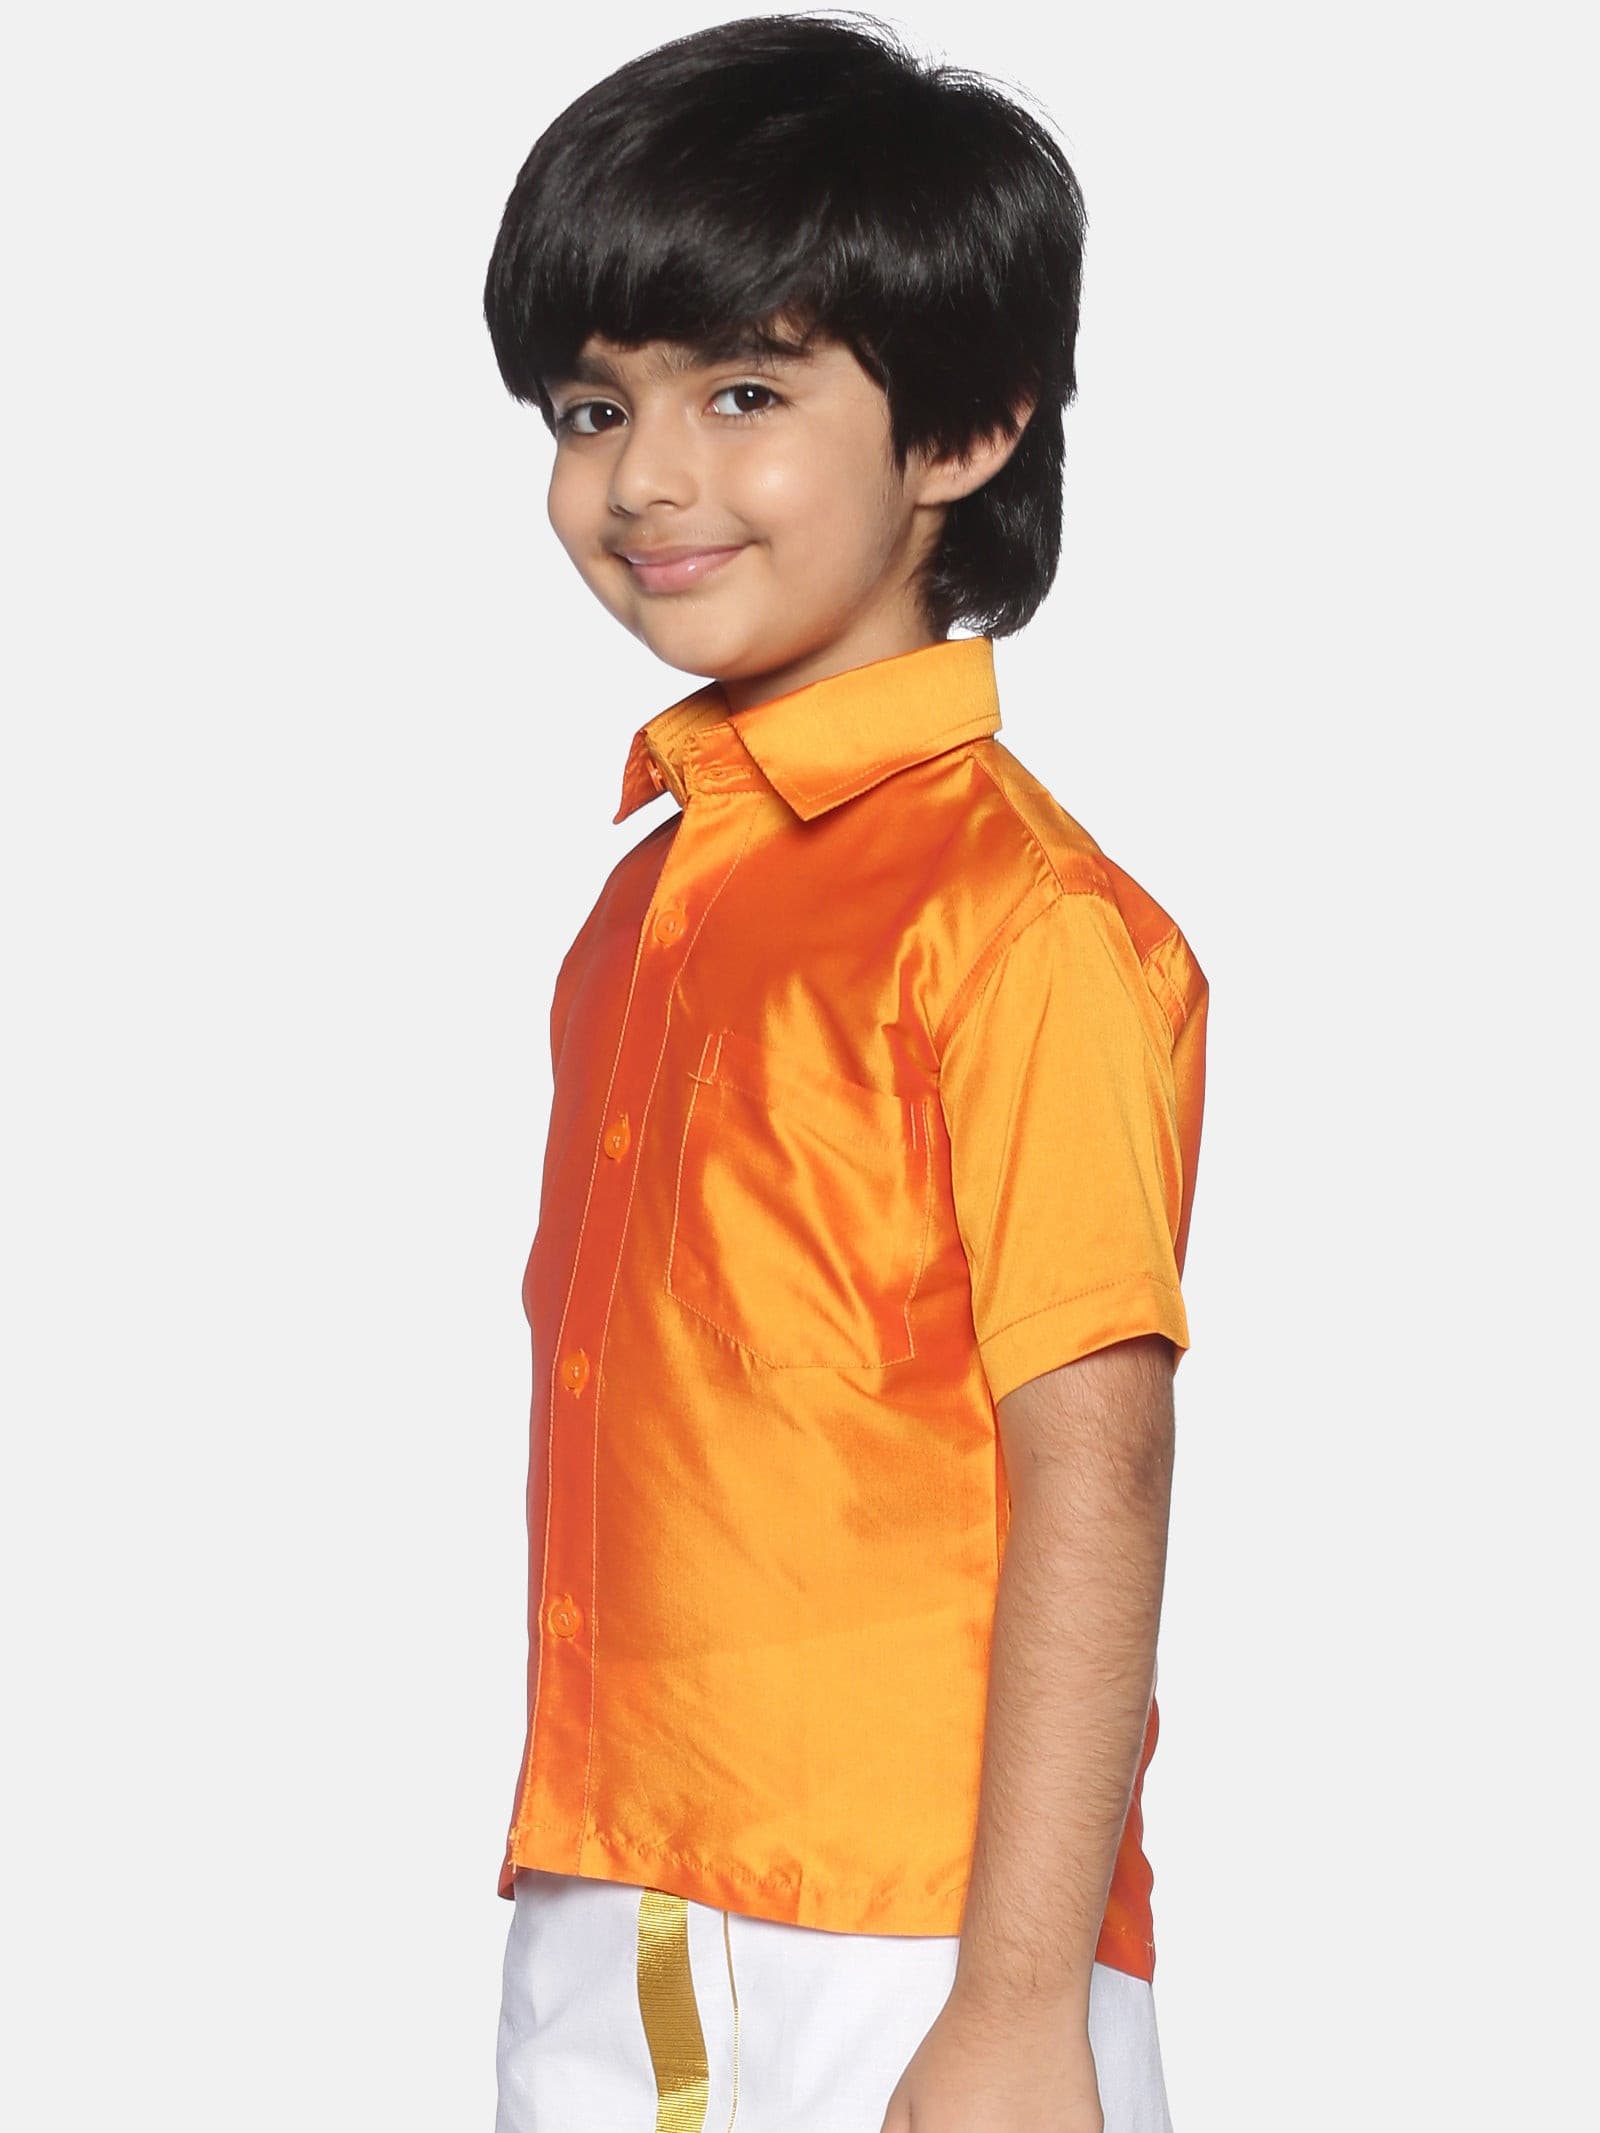 Boys Orange Colour Polyester Shirt.